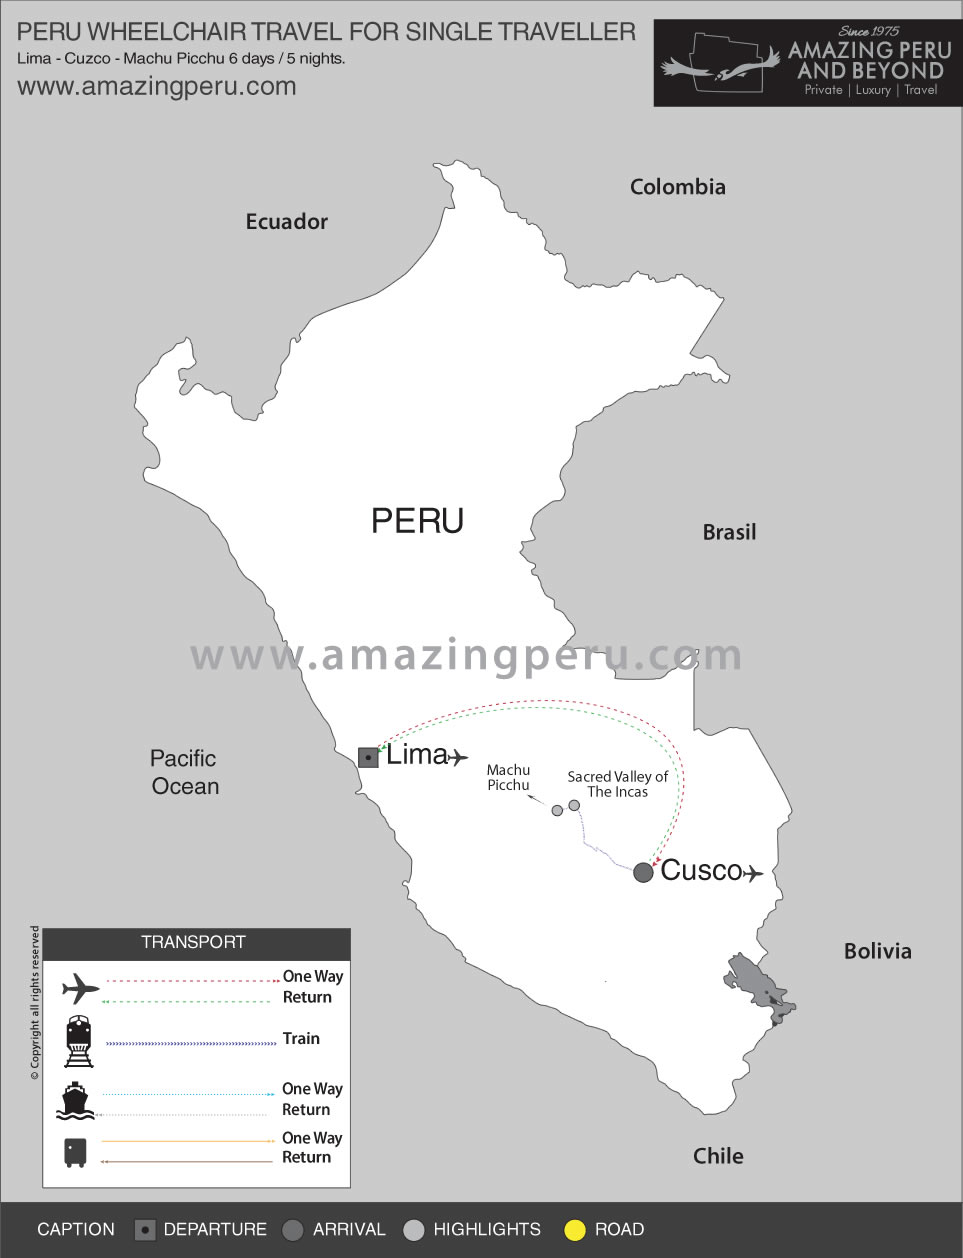 Peru Wheelchair Travel for Single traveller - 6 days / 5 nights.